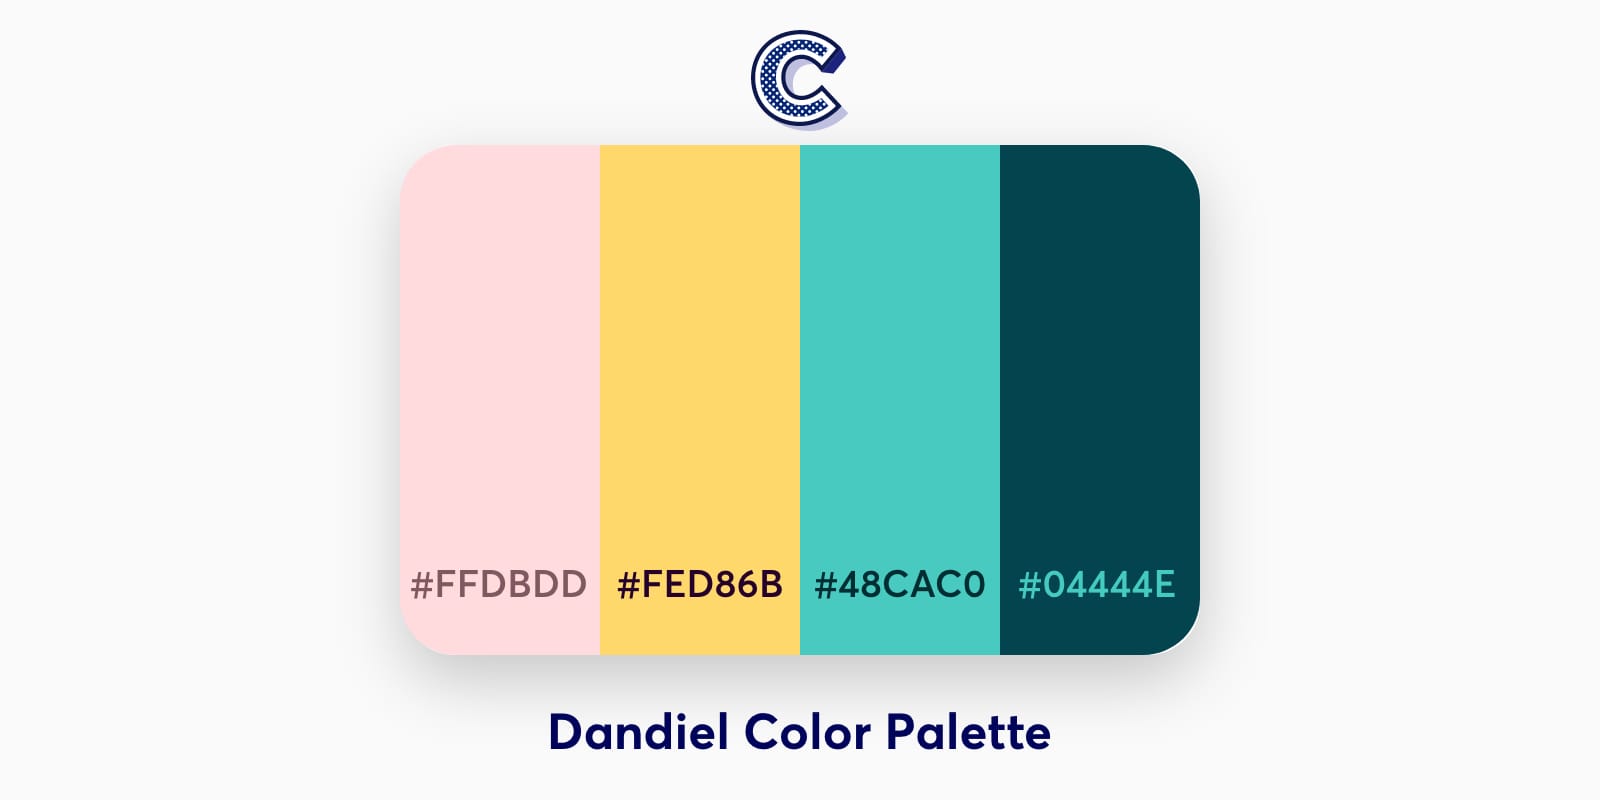 the featured image of dandiel color palette